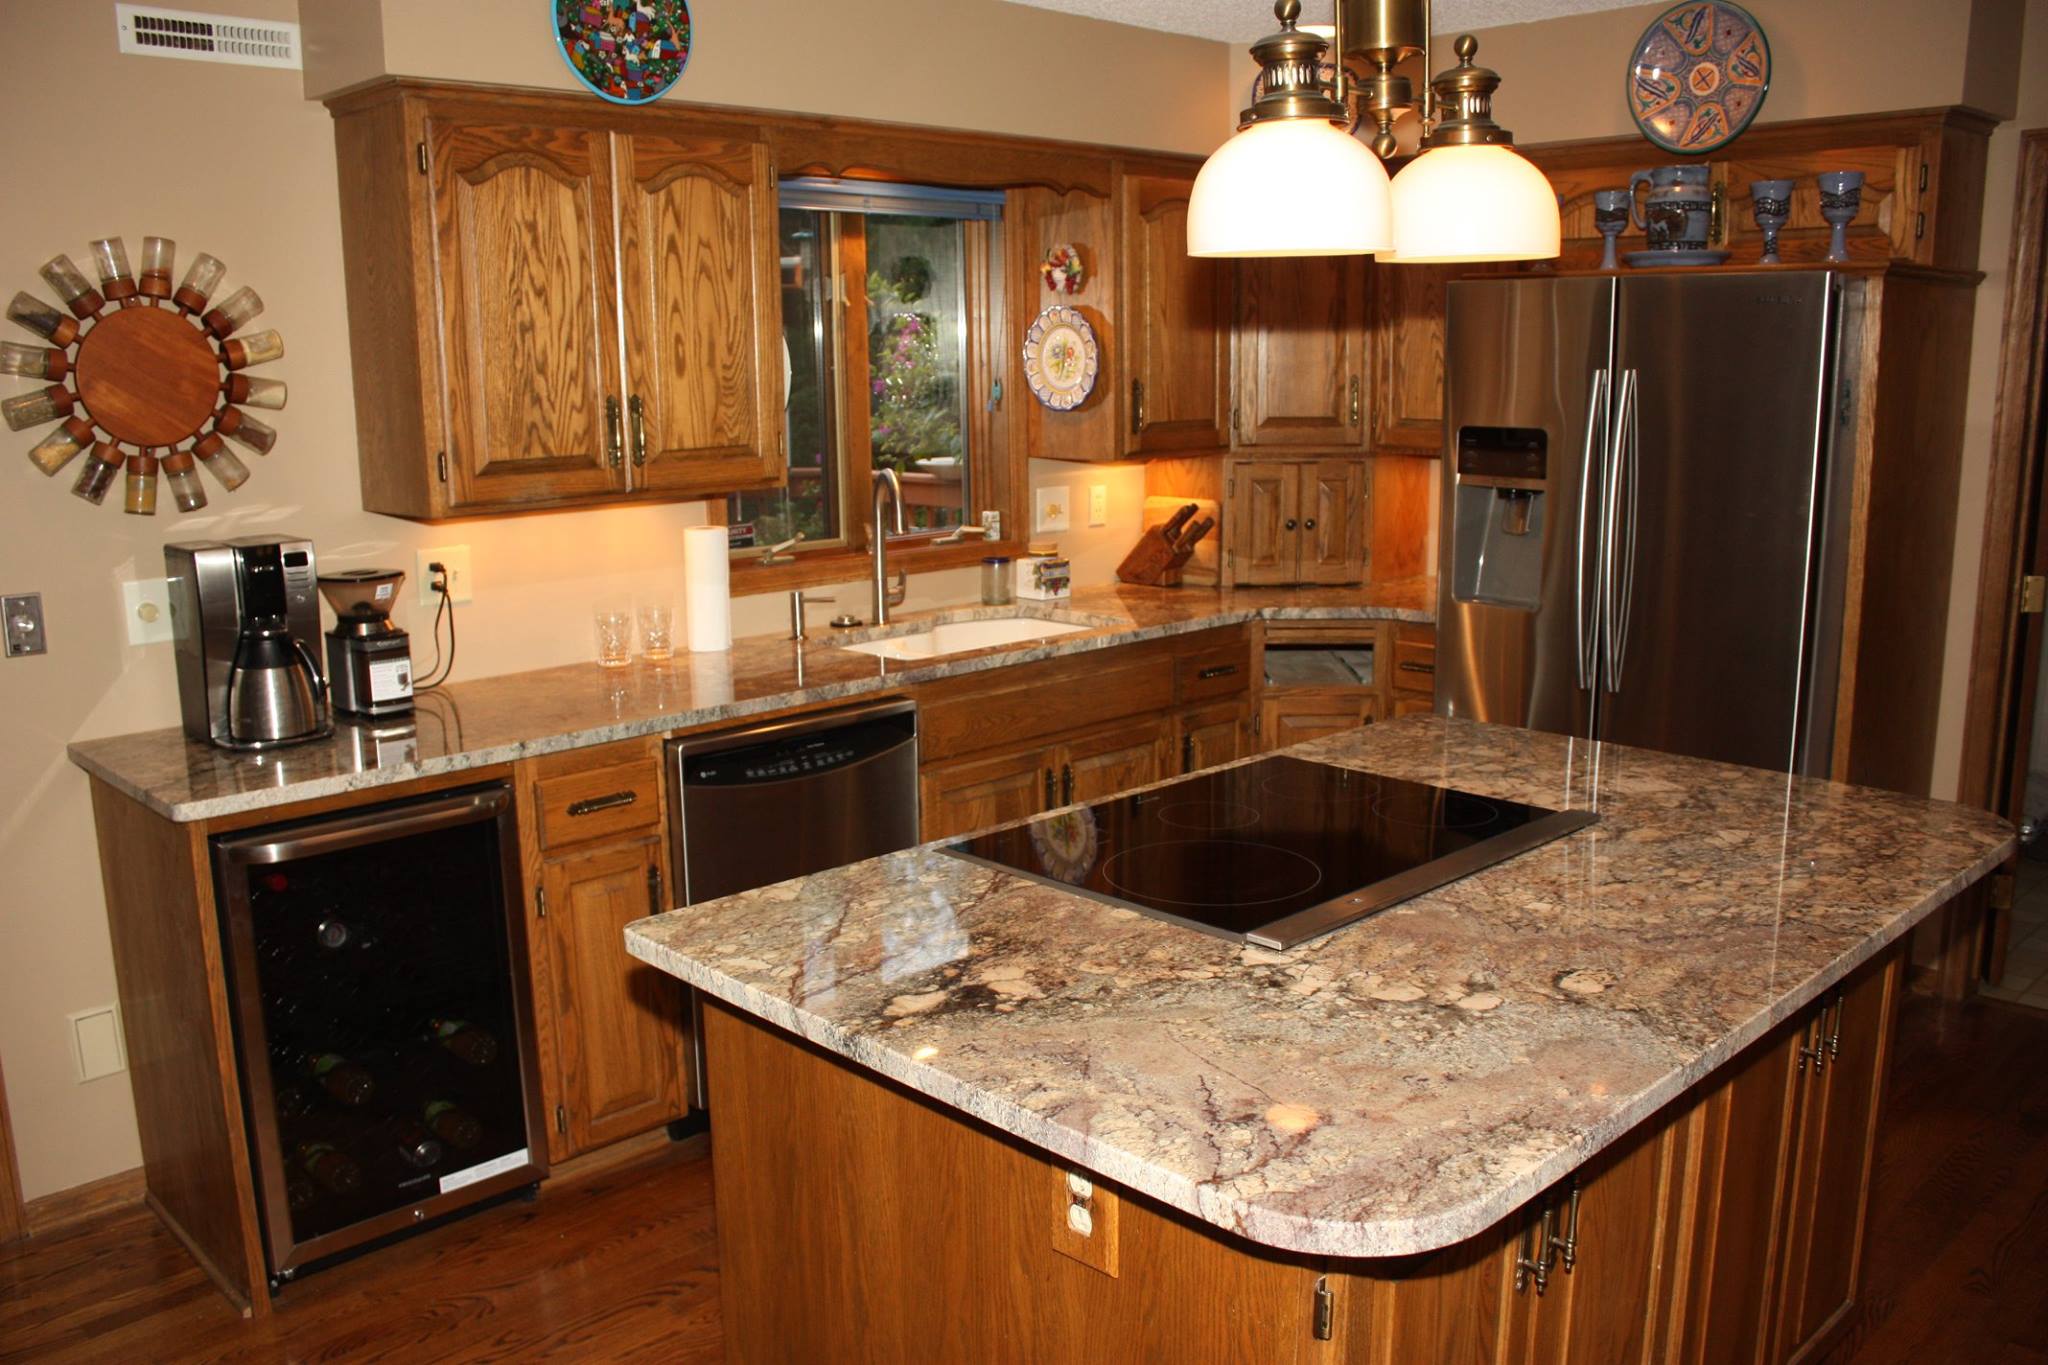 Granite Countertops in Kitchen Remodel After